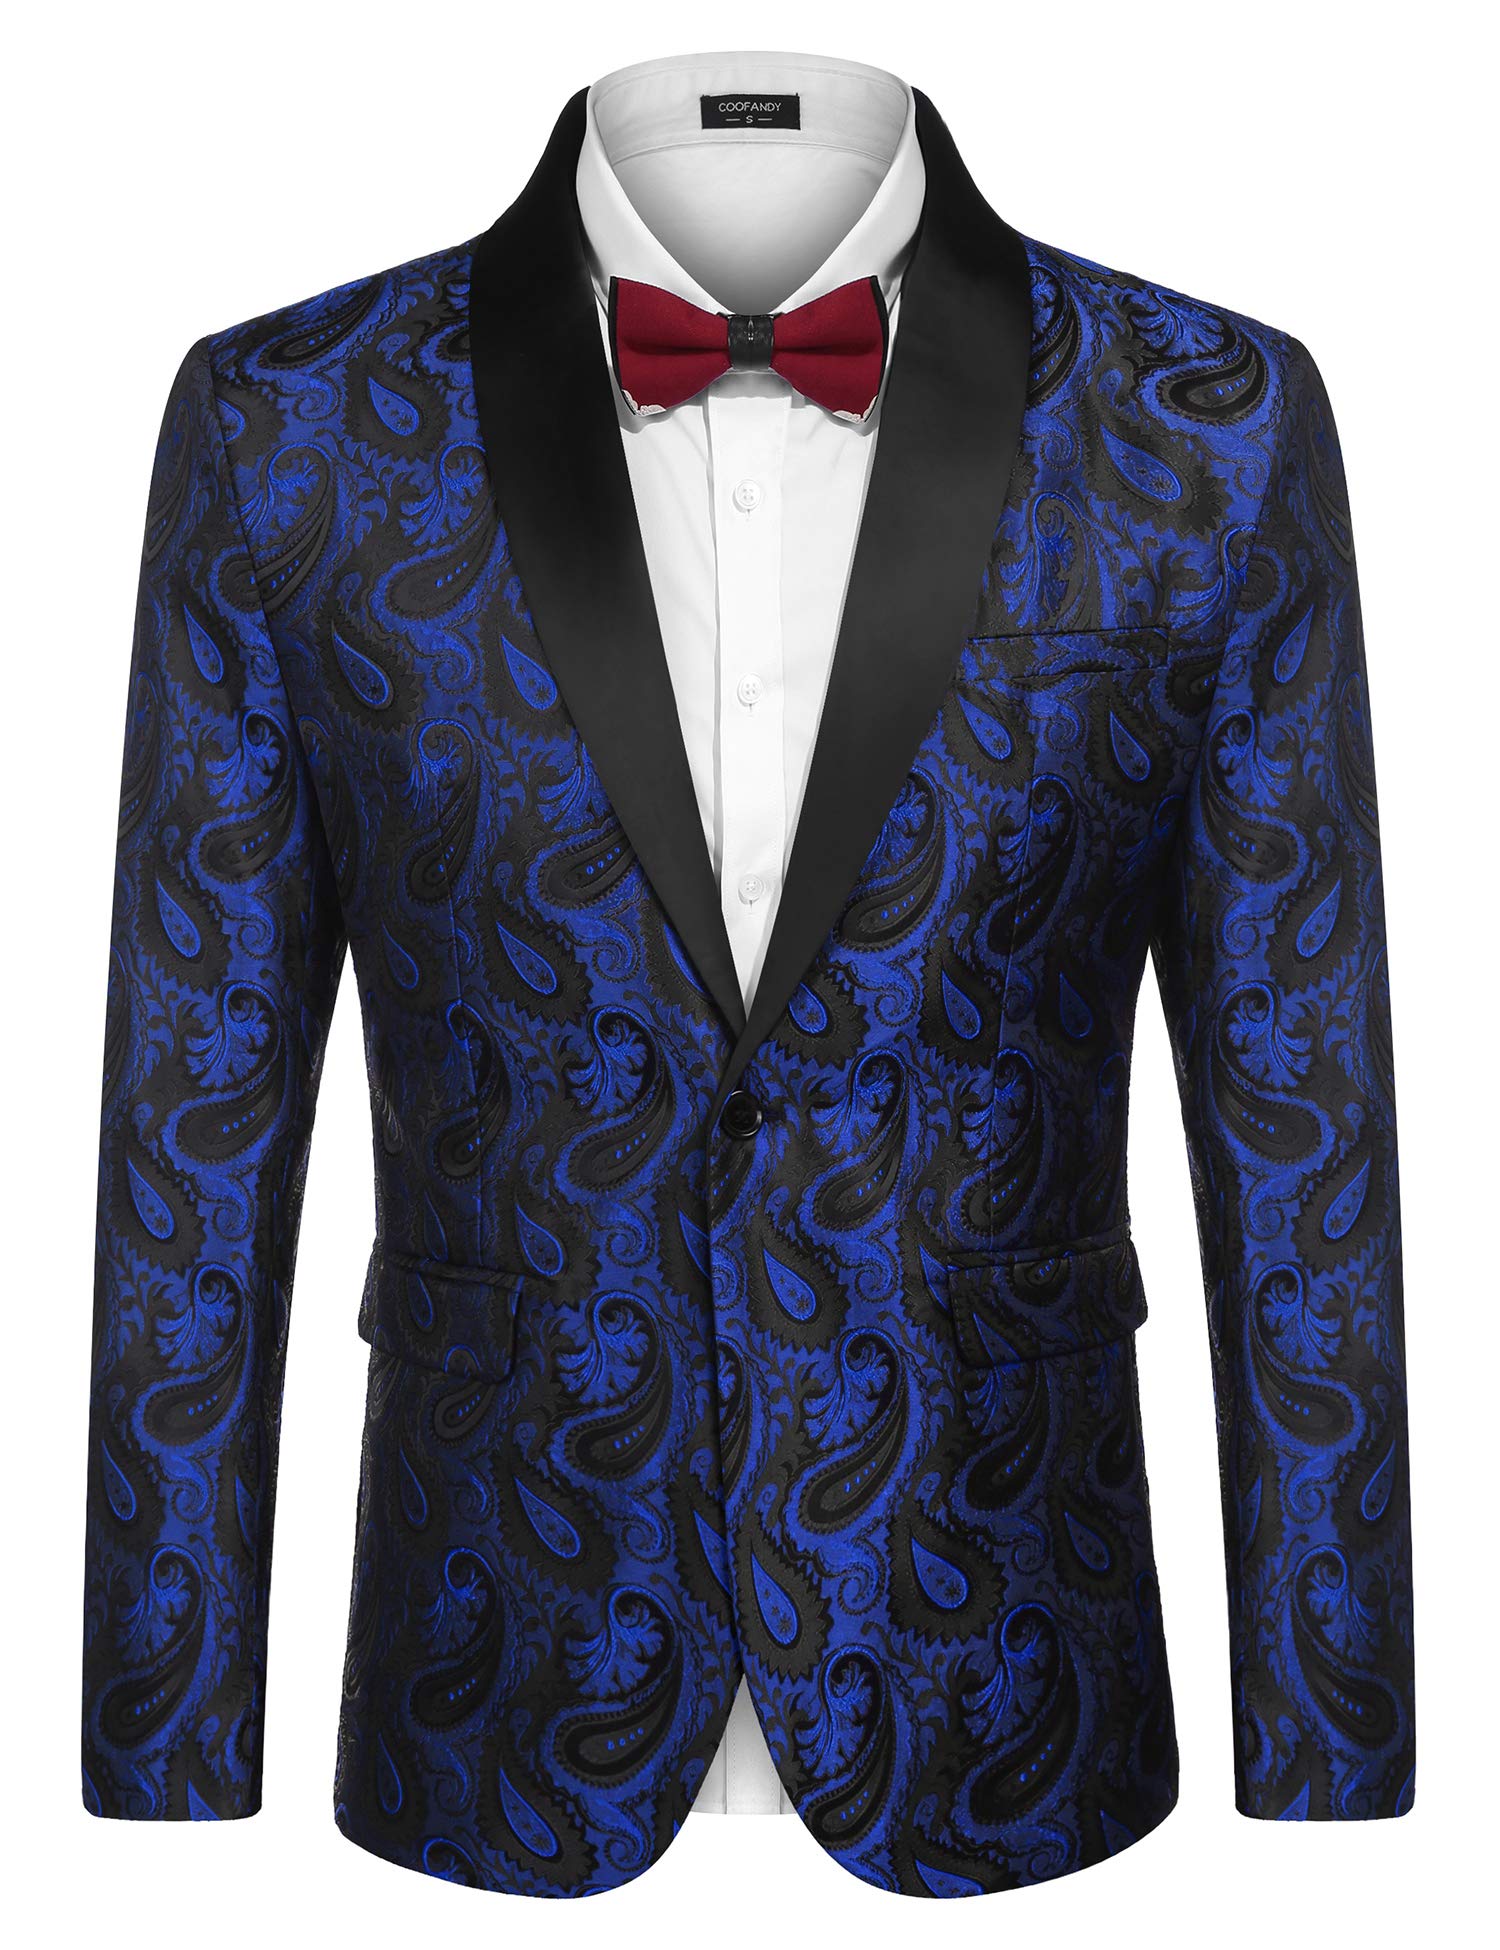 cOOFANDY Mens Floral Tuxedo Jacket Paisley Shawl Lapel Suit Blazer Jacket for Dinner,Prom,Wedding Blue